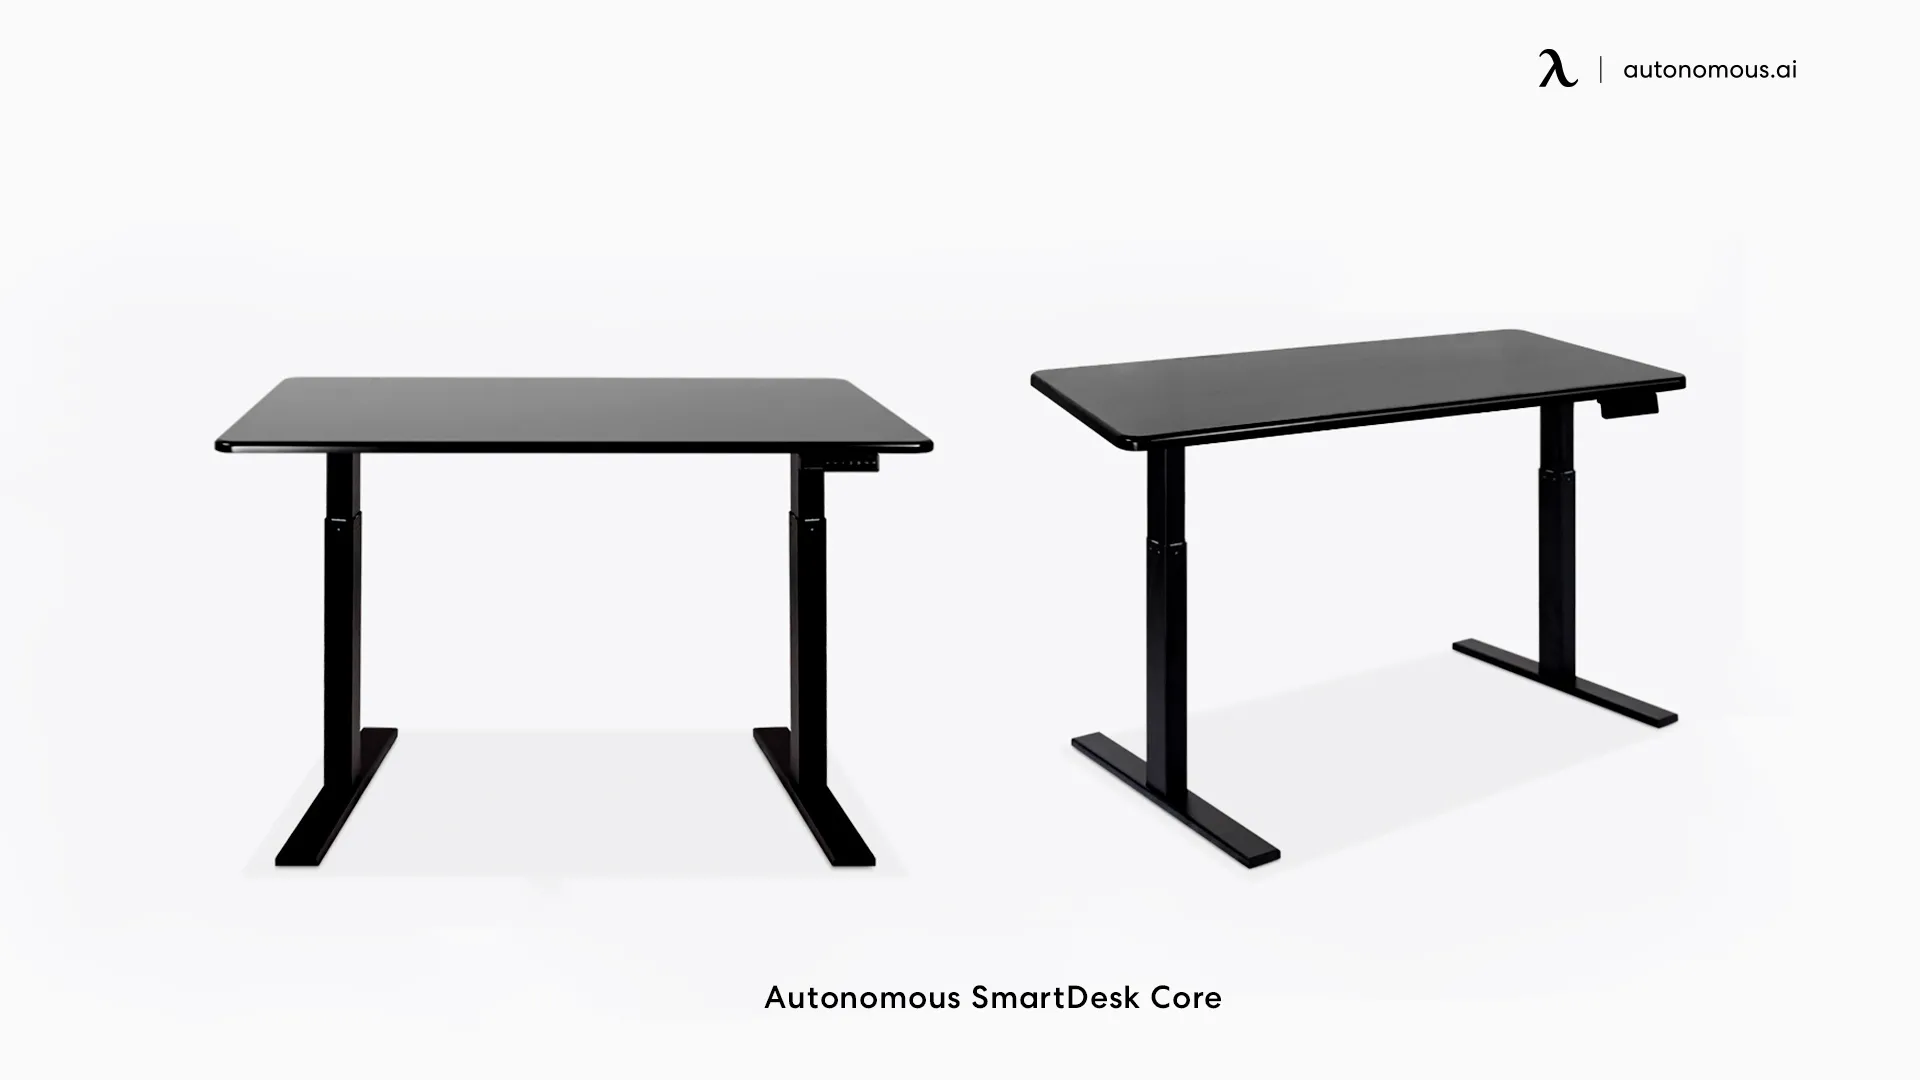 Autonomous SmartDesk Core small PC desk